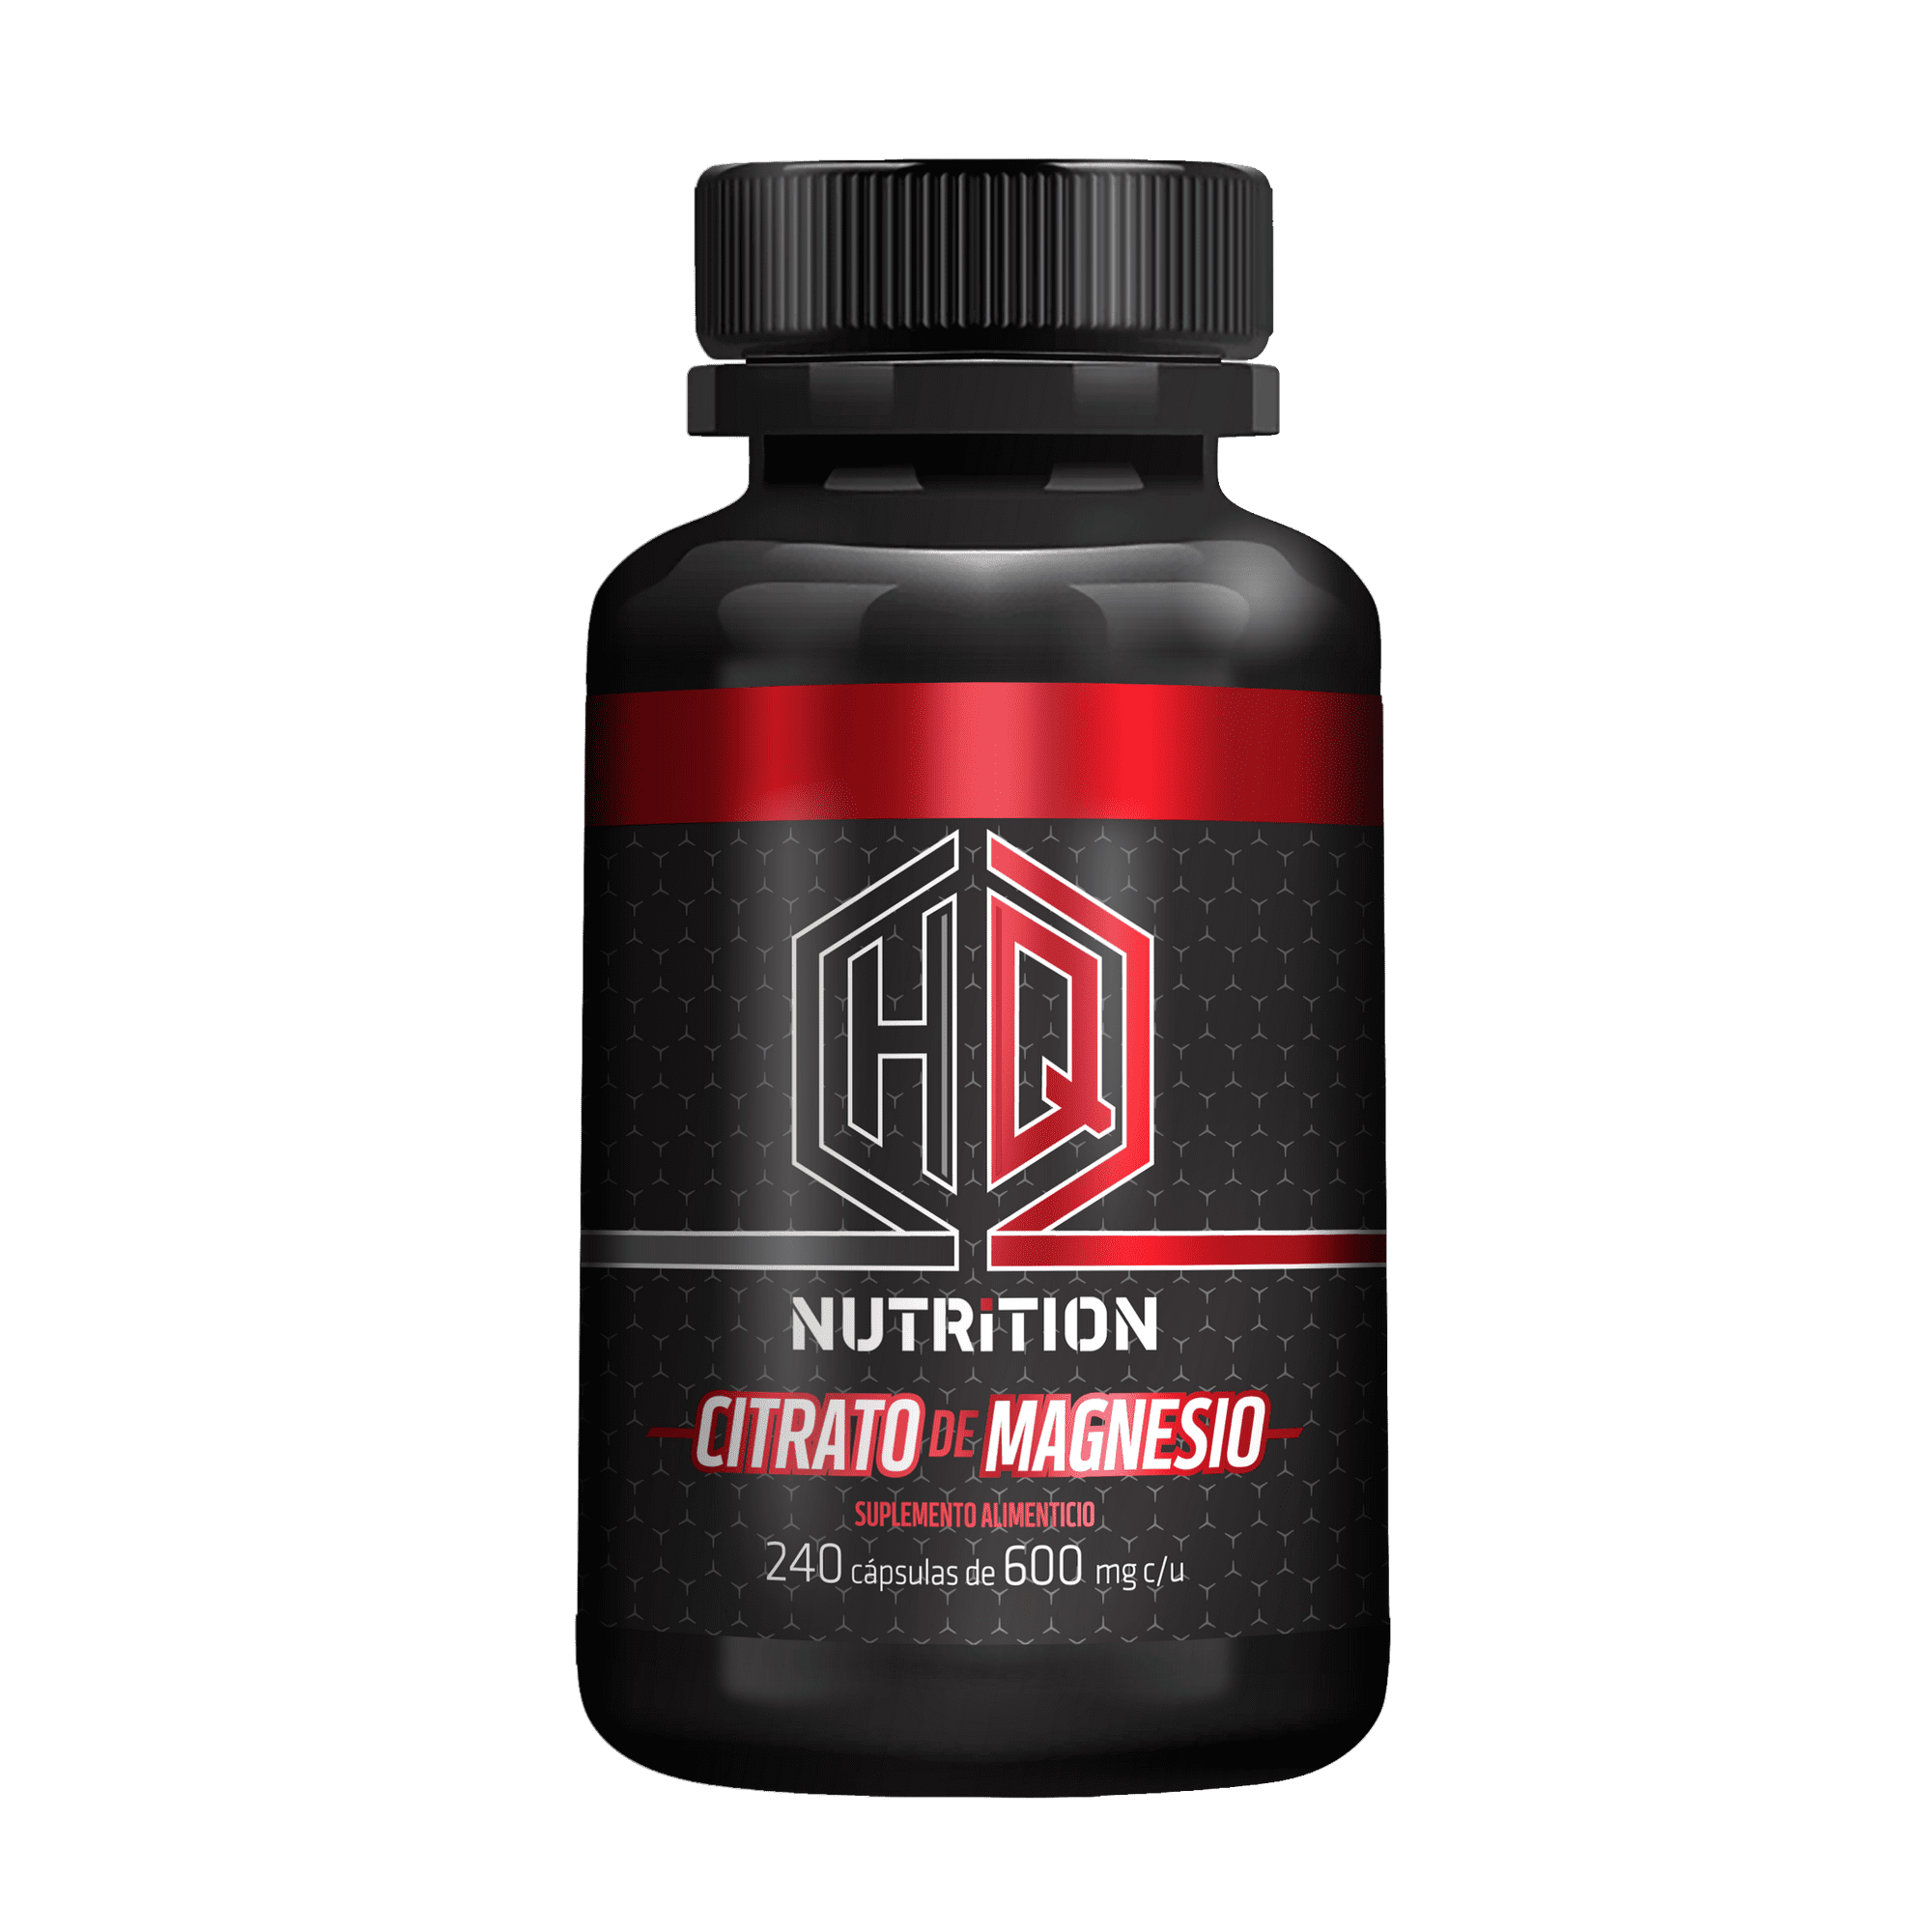 Citrato de magnesio hq nutrition 240 cápsulas suplemento alimenticio